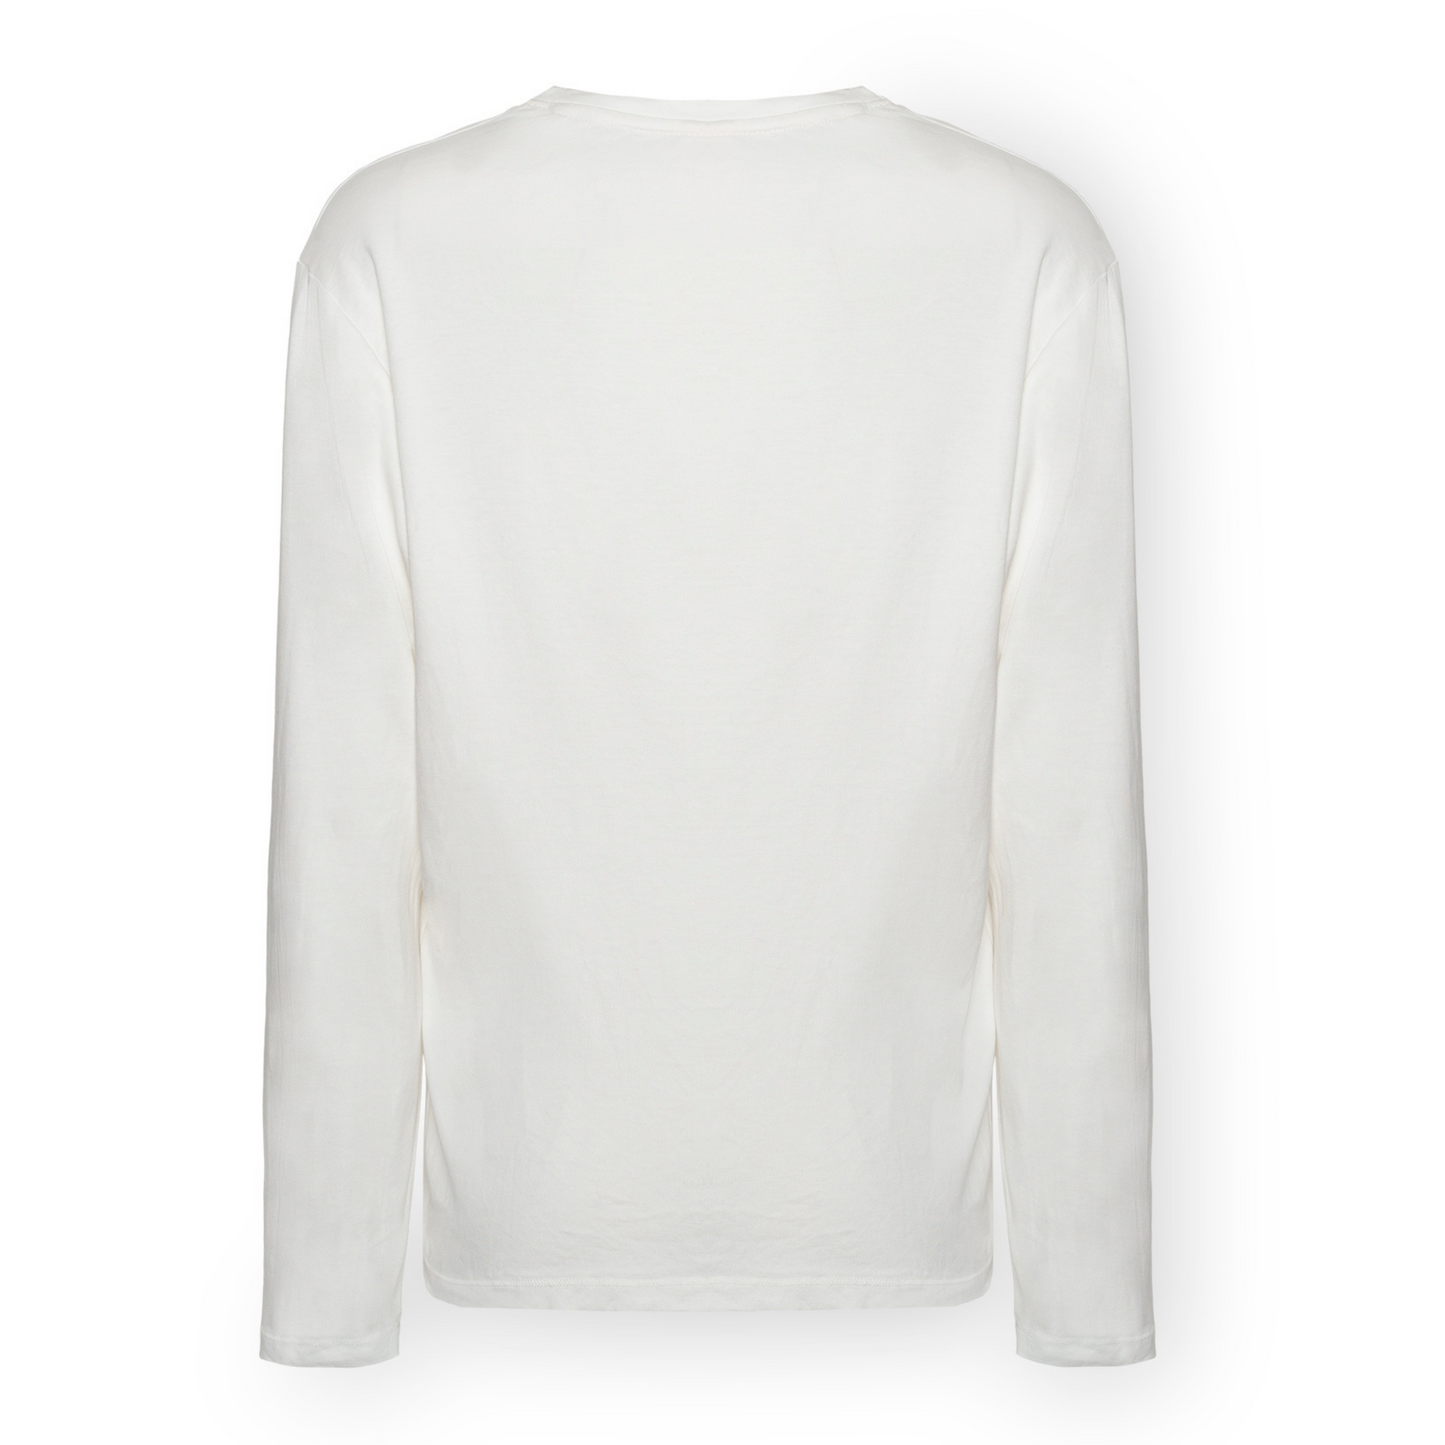 Camiseta manga larga Wayta en algodón pima orgánico